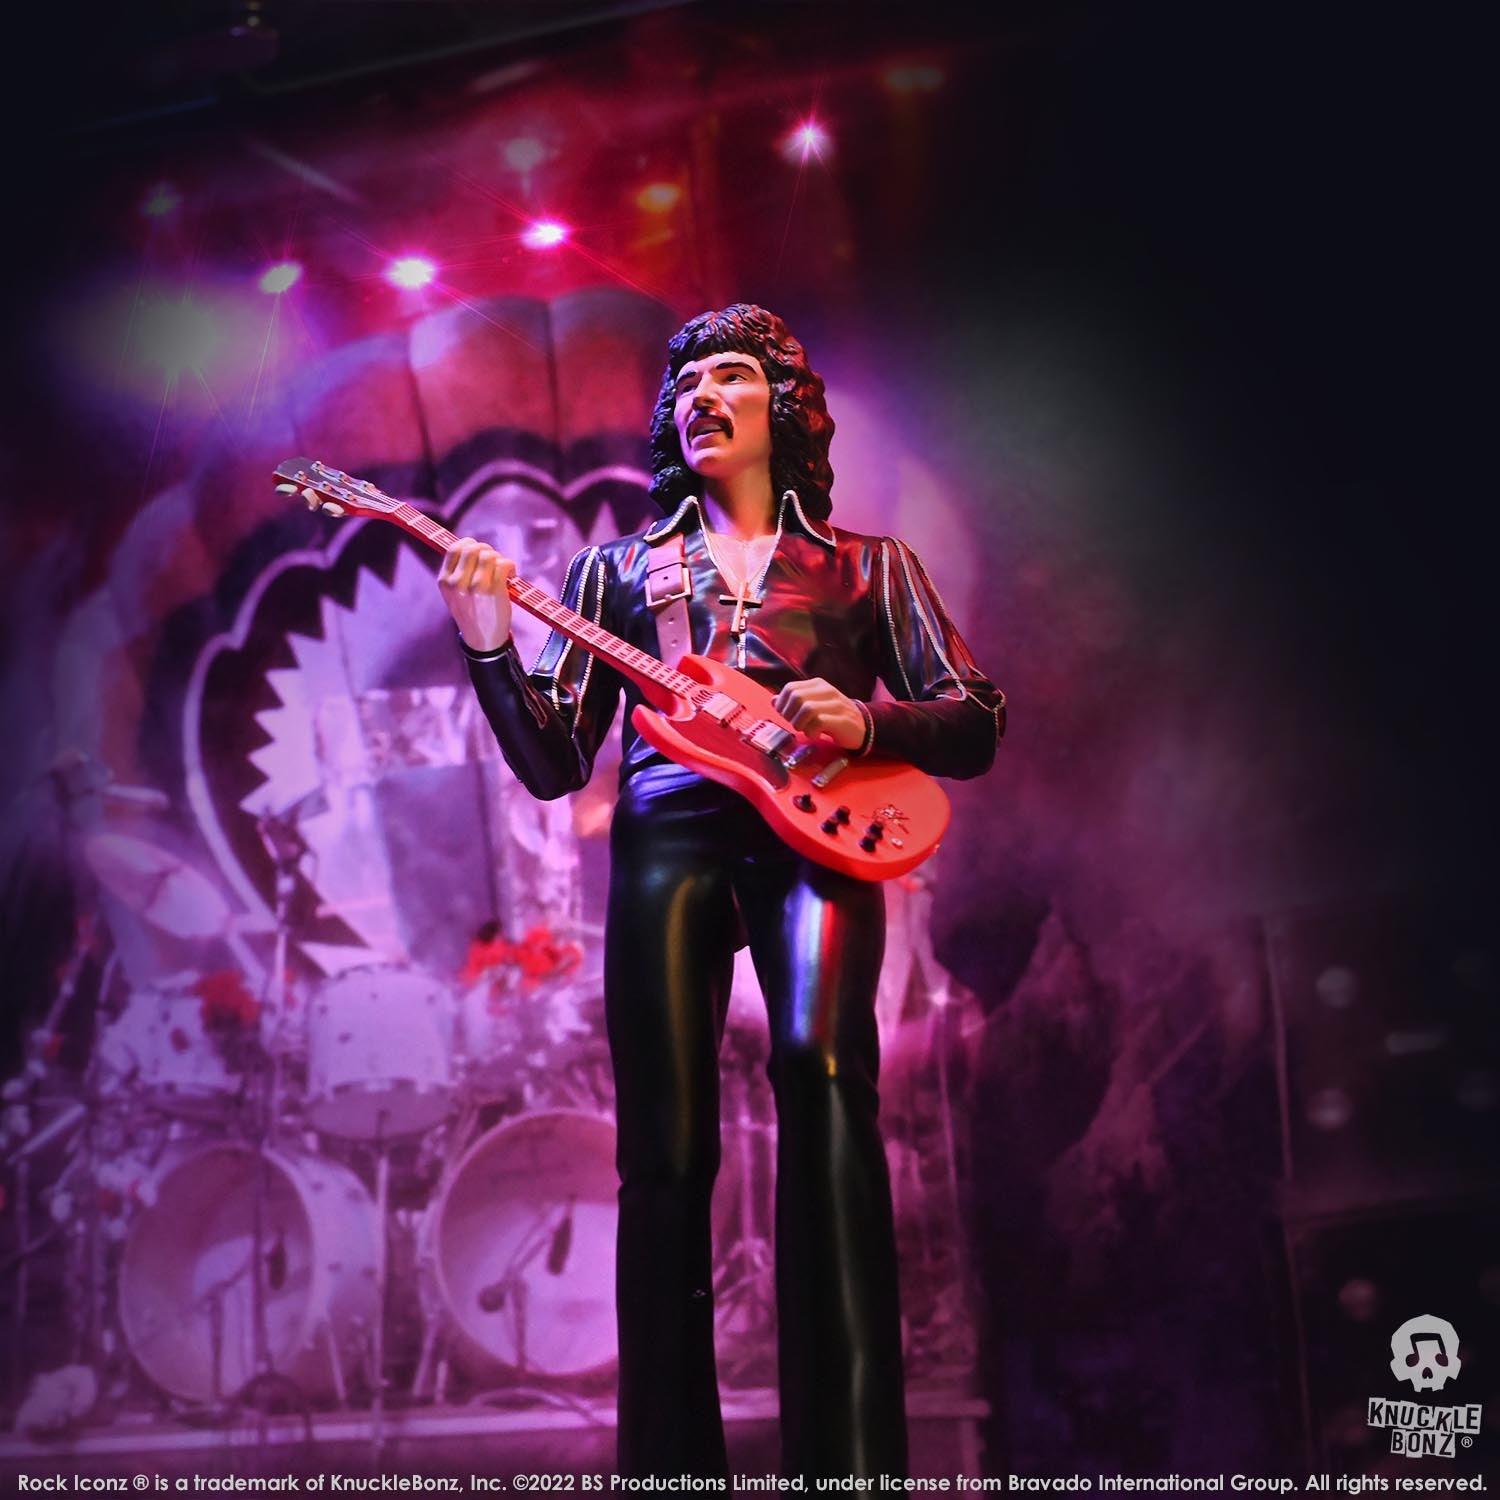 KNUBLKSABBATH100 Black Sabbath - Rock Iconz Statues (Set of 4) - KnuckleBonz - Titan Pop Culture